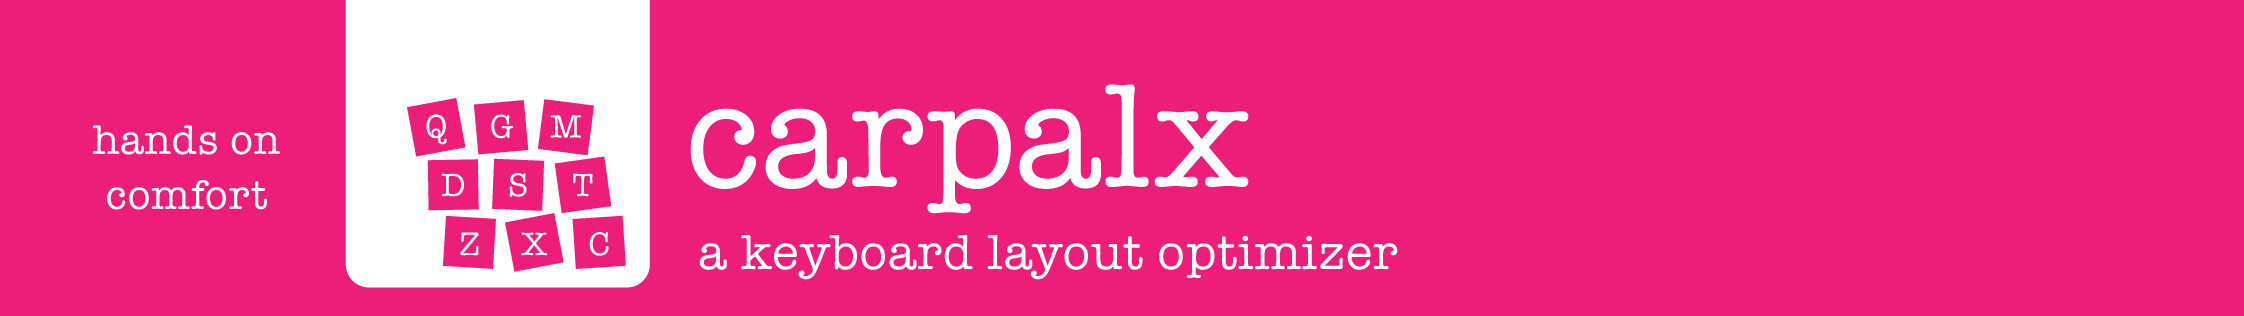 
carpalx - keyboard layout optimizer - save your carpals
